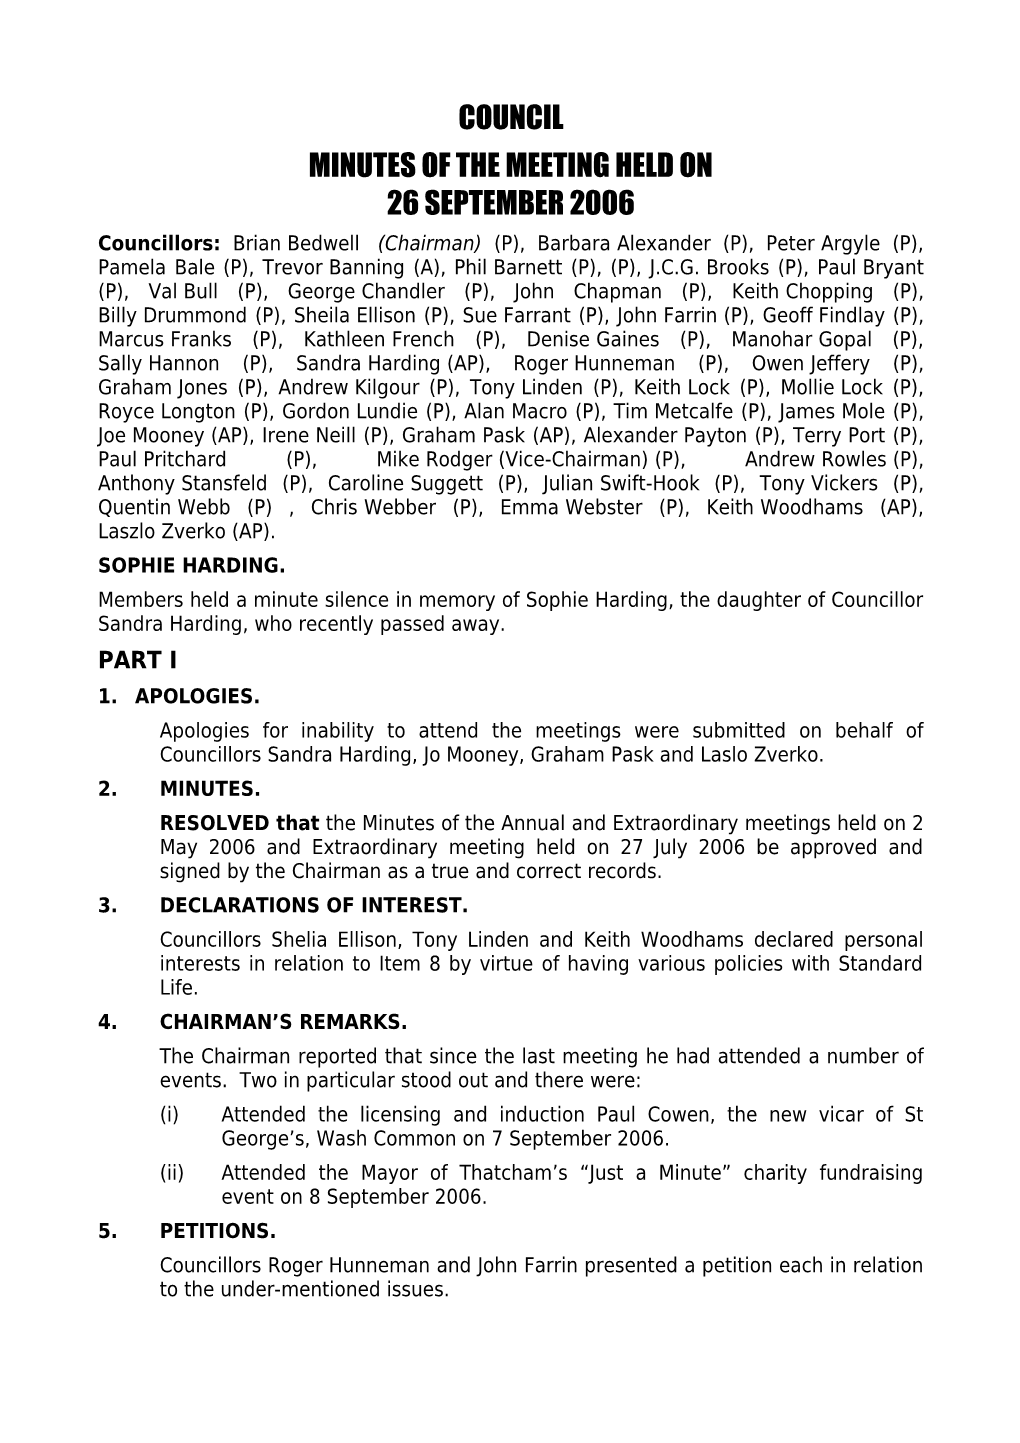 Council Minutes 26 November 2006